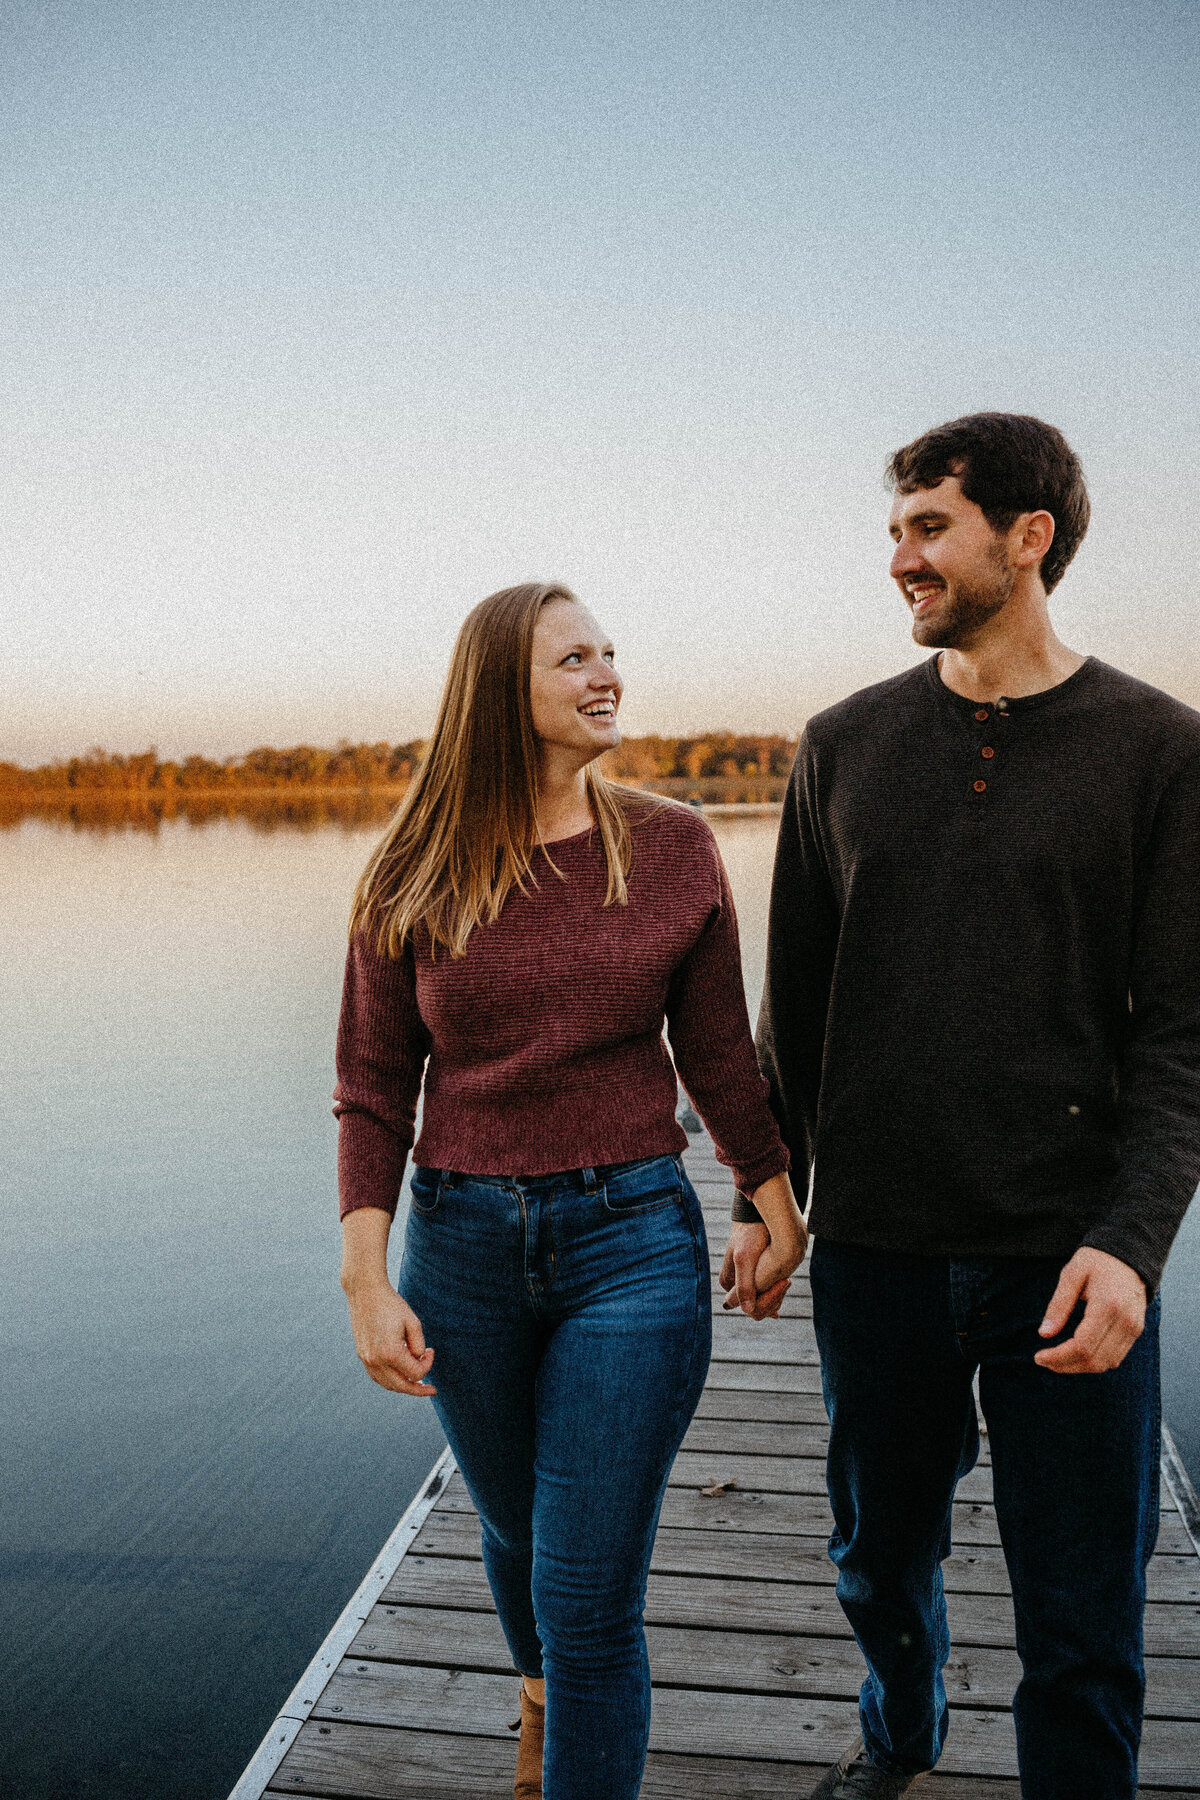 engaged-couple-walking-by-lake